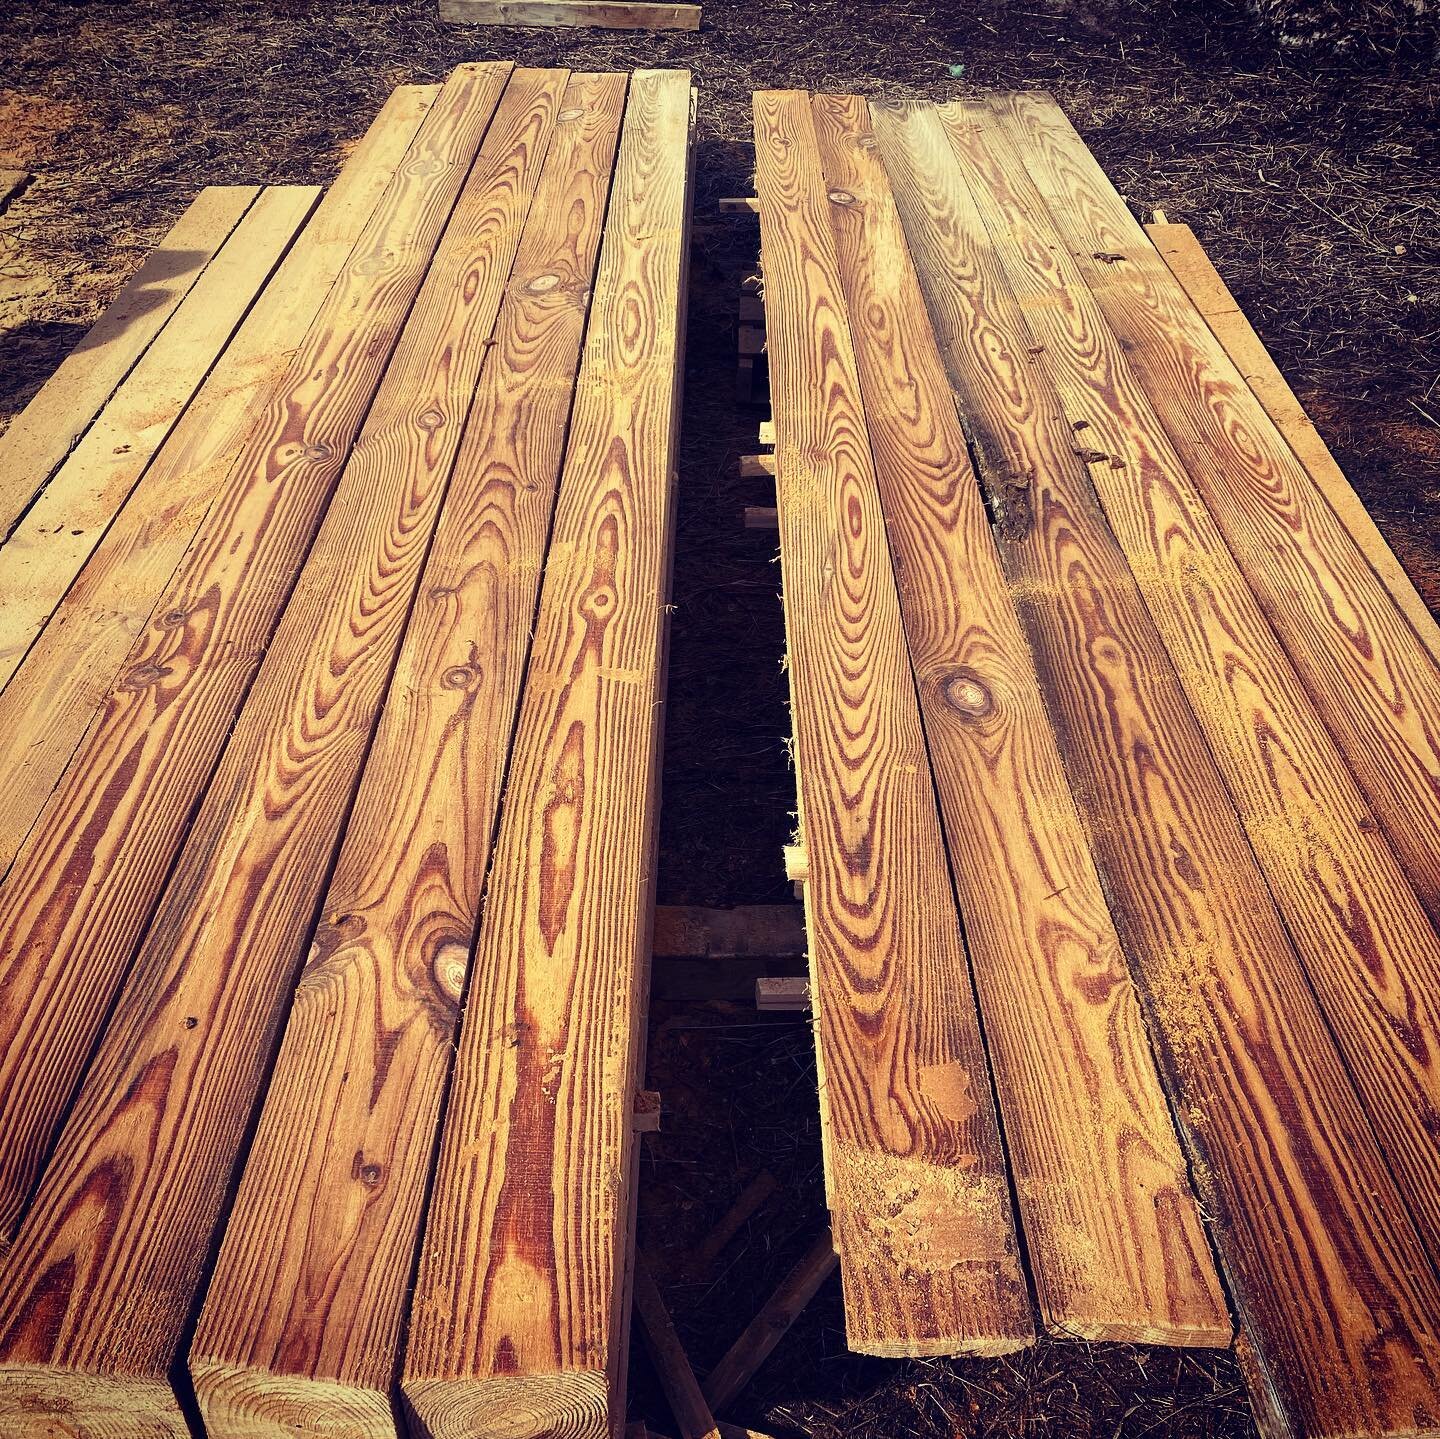 Pretty nice hydro poles. &bull;
&bull;
&bull;
&bull;
&bull;
#rusticfurniture #durhamwoodworking #kawarthalakescarpentry
 #woodworking #cedar #woodsiding #woodmizer #reclaimedwood #reclaimedwoodfurniture #woodprojects #carpentry #sawdust #durhamwoodwo